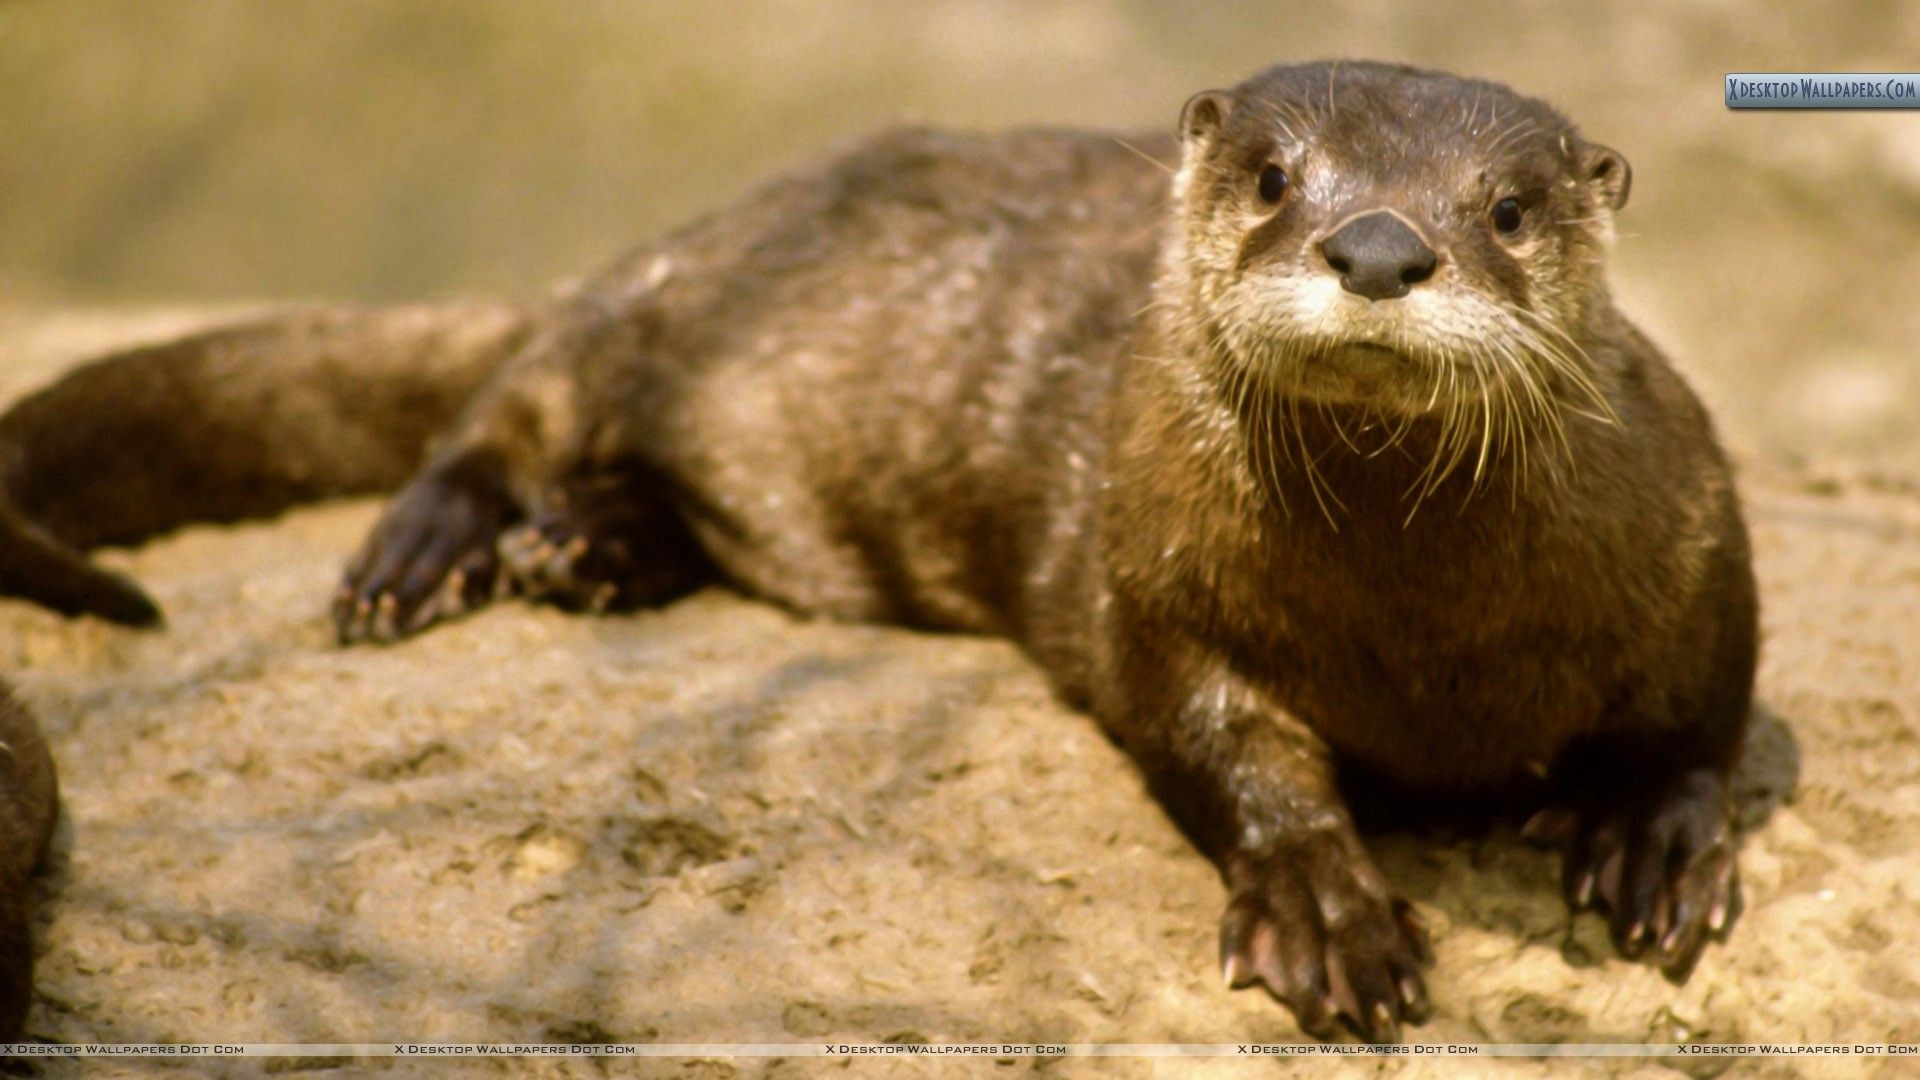 River Otter, Nashville, Tennessee. River otter, Otters, Animals